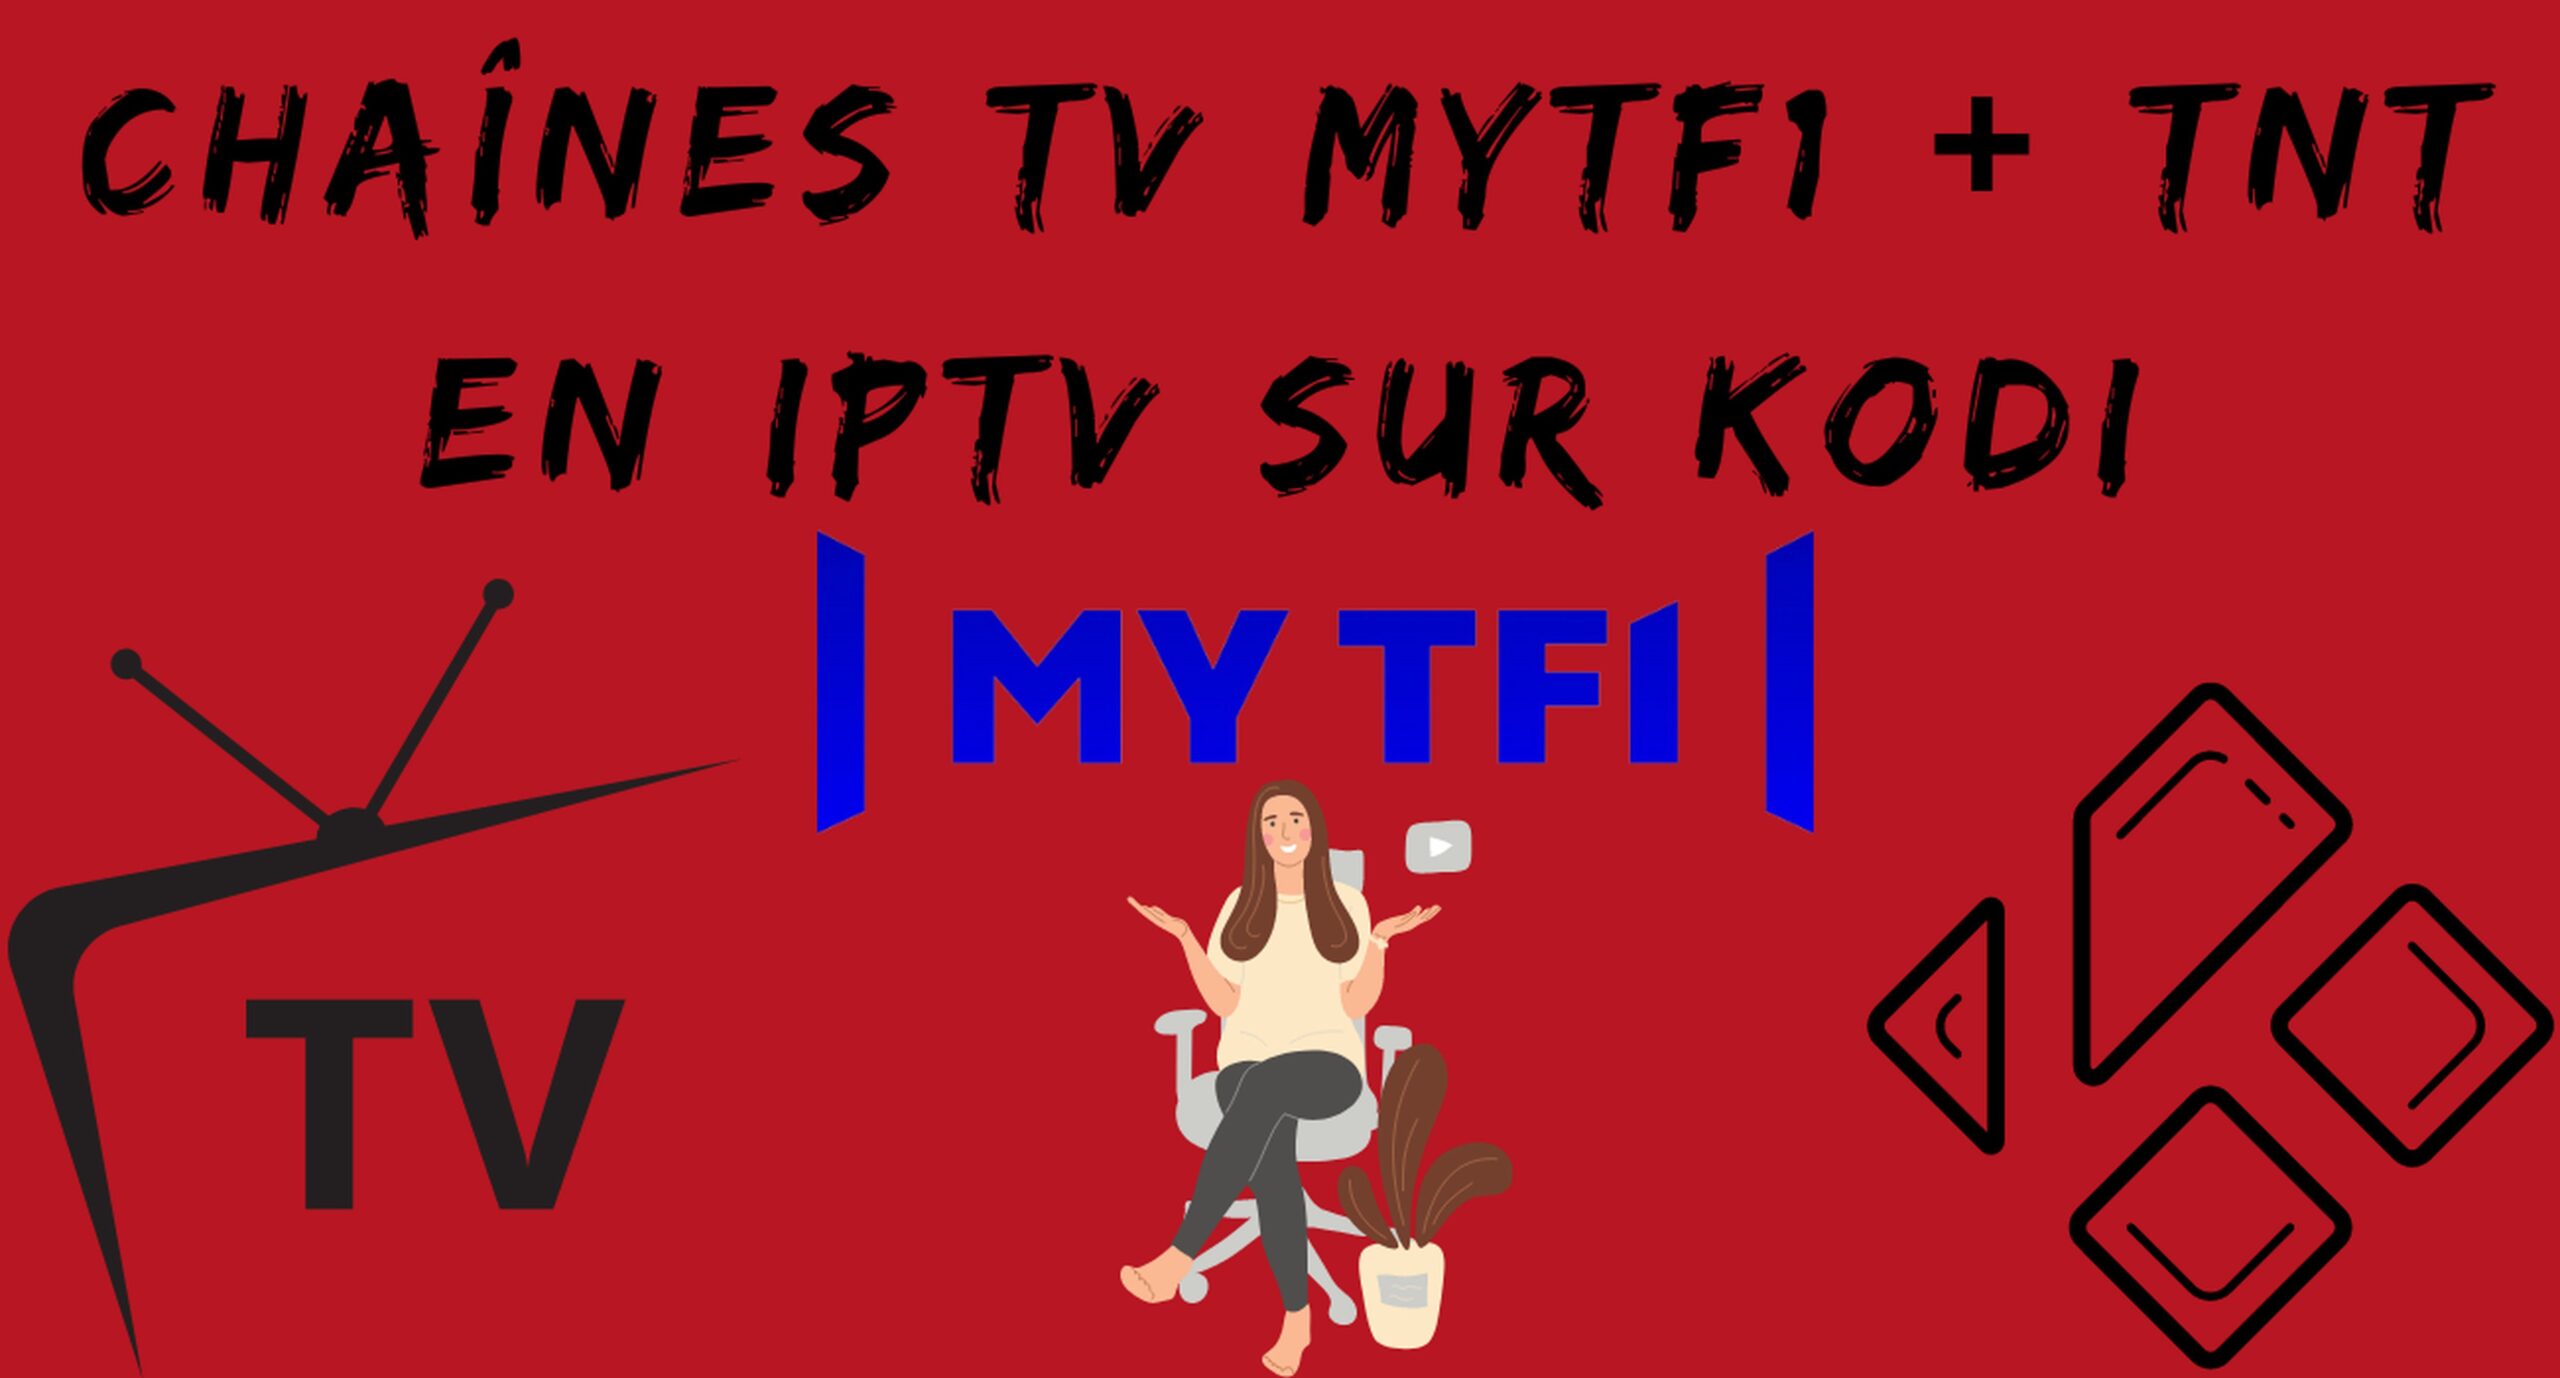 Regarder les chaînes TV MyTF1 + TNT en IPTV sur KODI